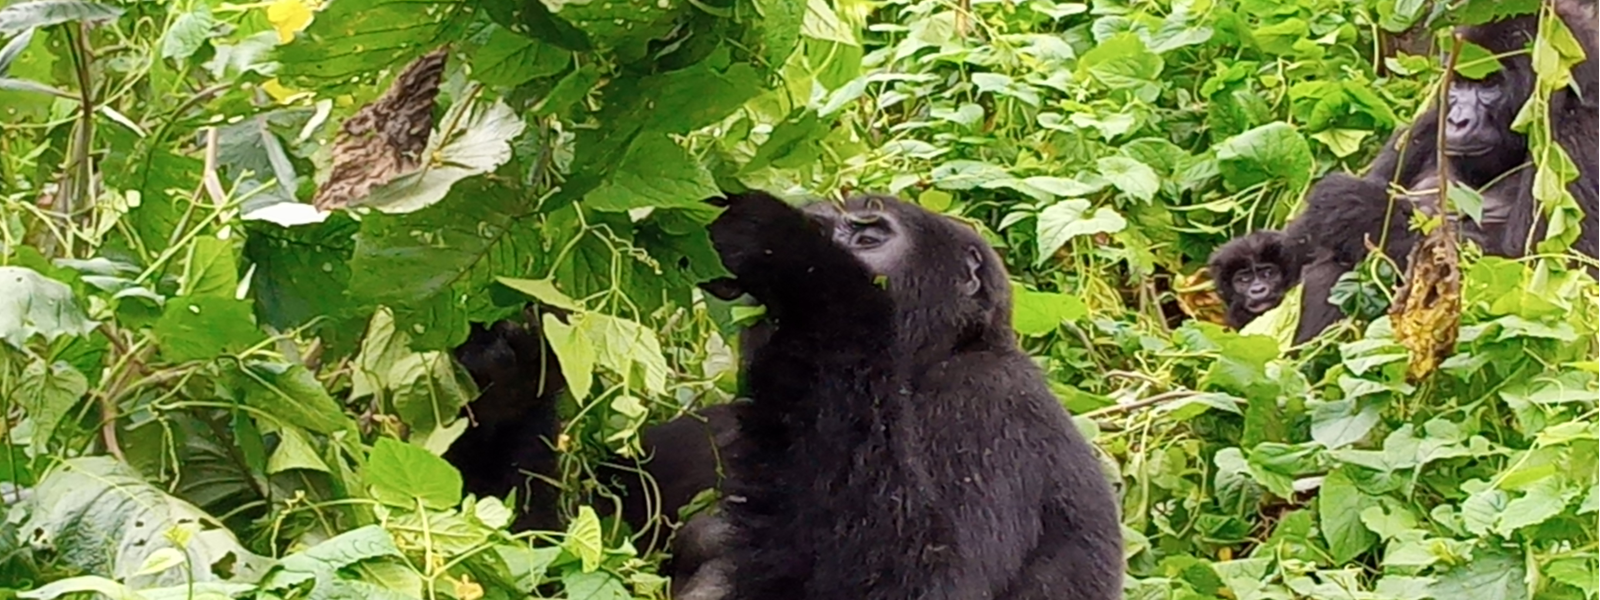 rwanda-gorilla-trekking-gorilla-safari-rwanda-guide